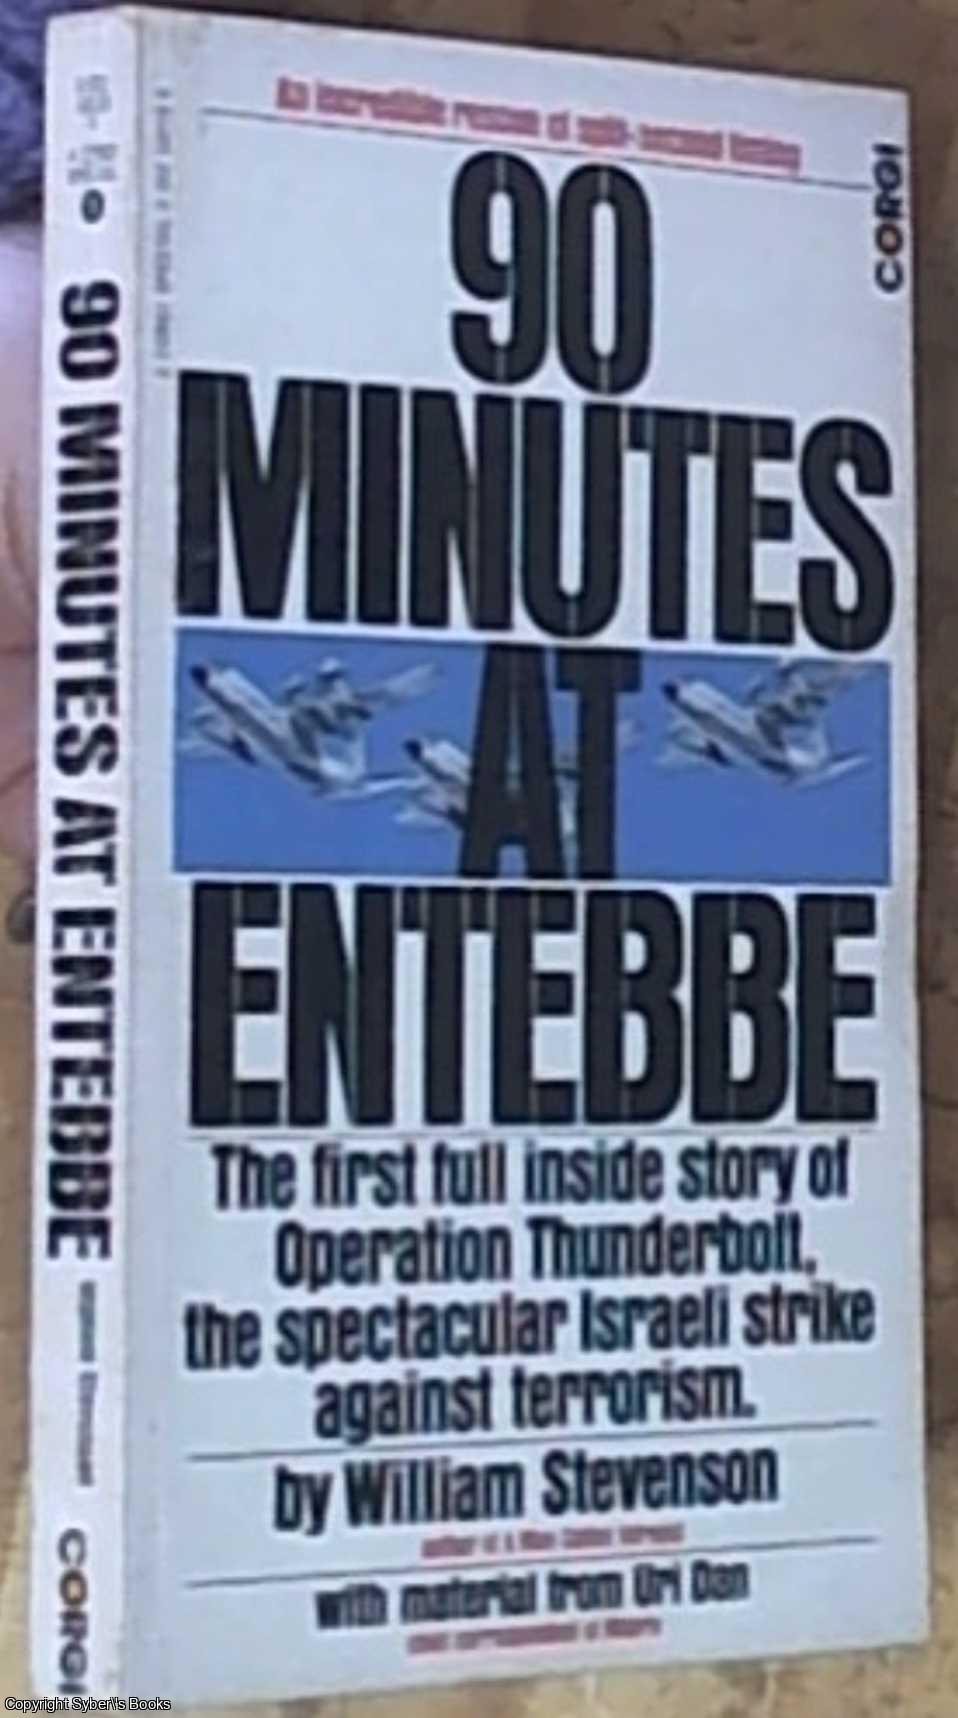 Stevenson, William - 90 Minutes at Entebbe